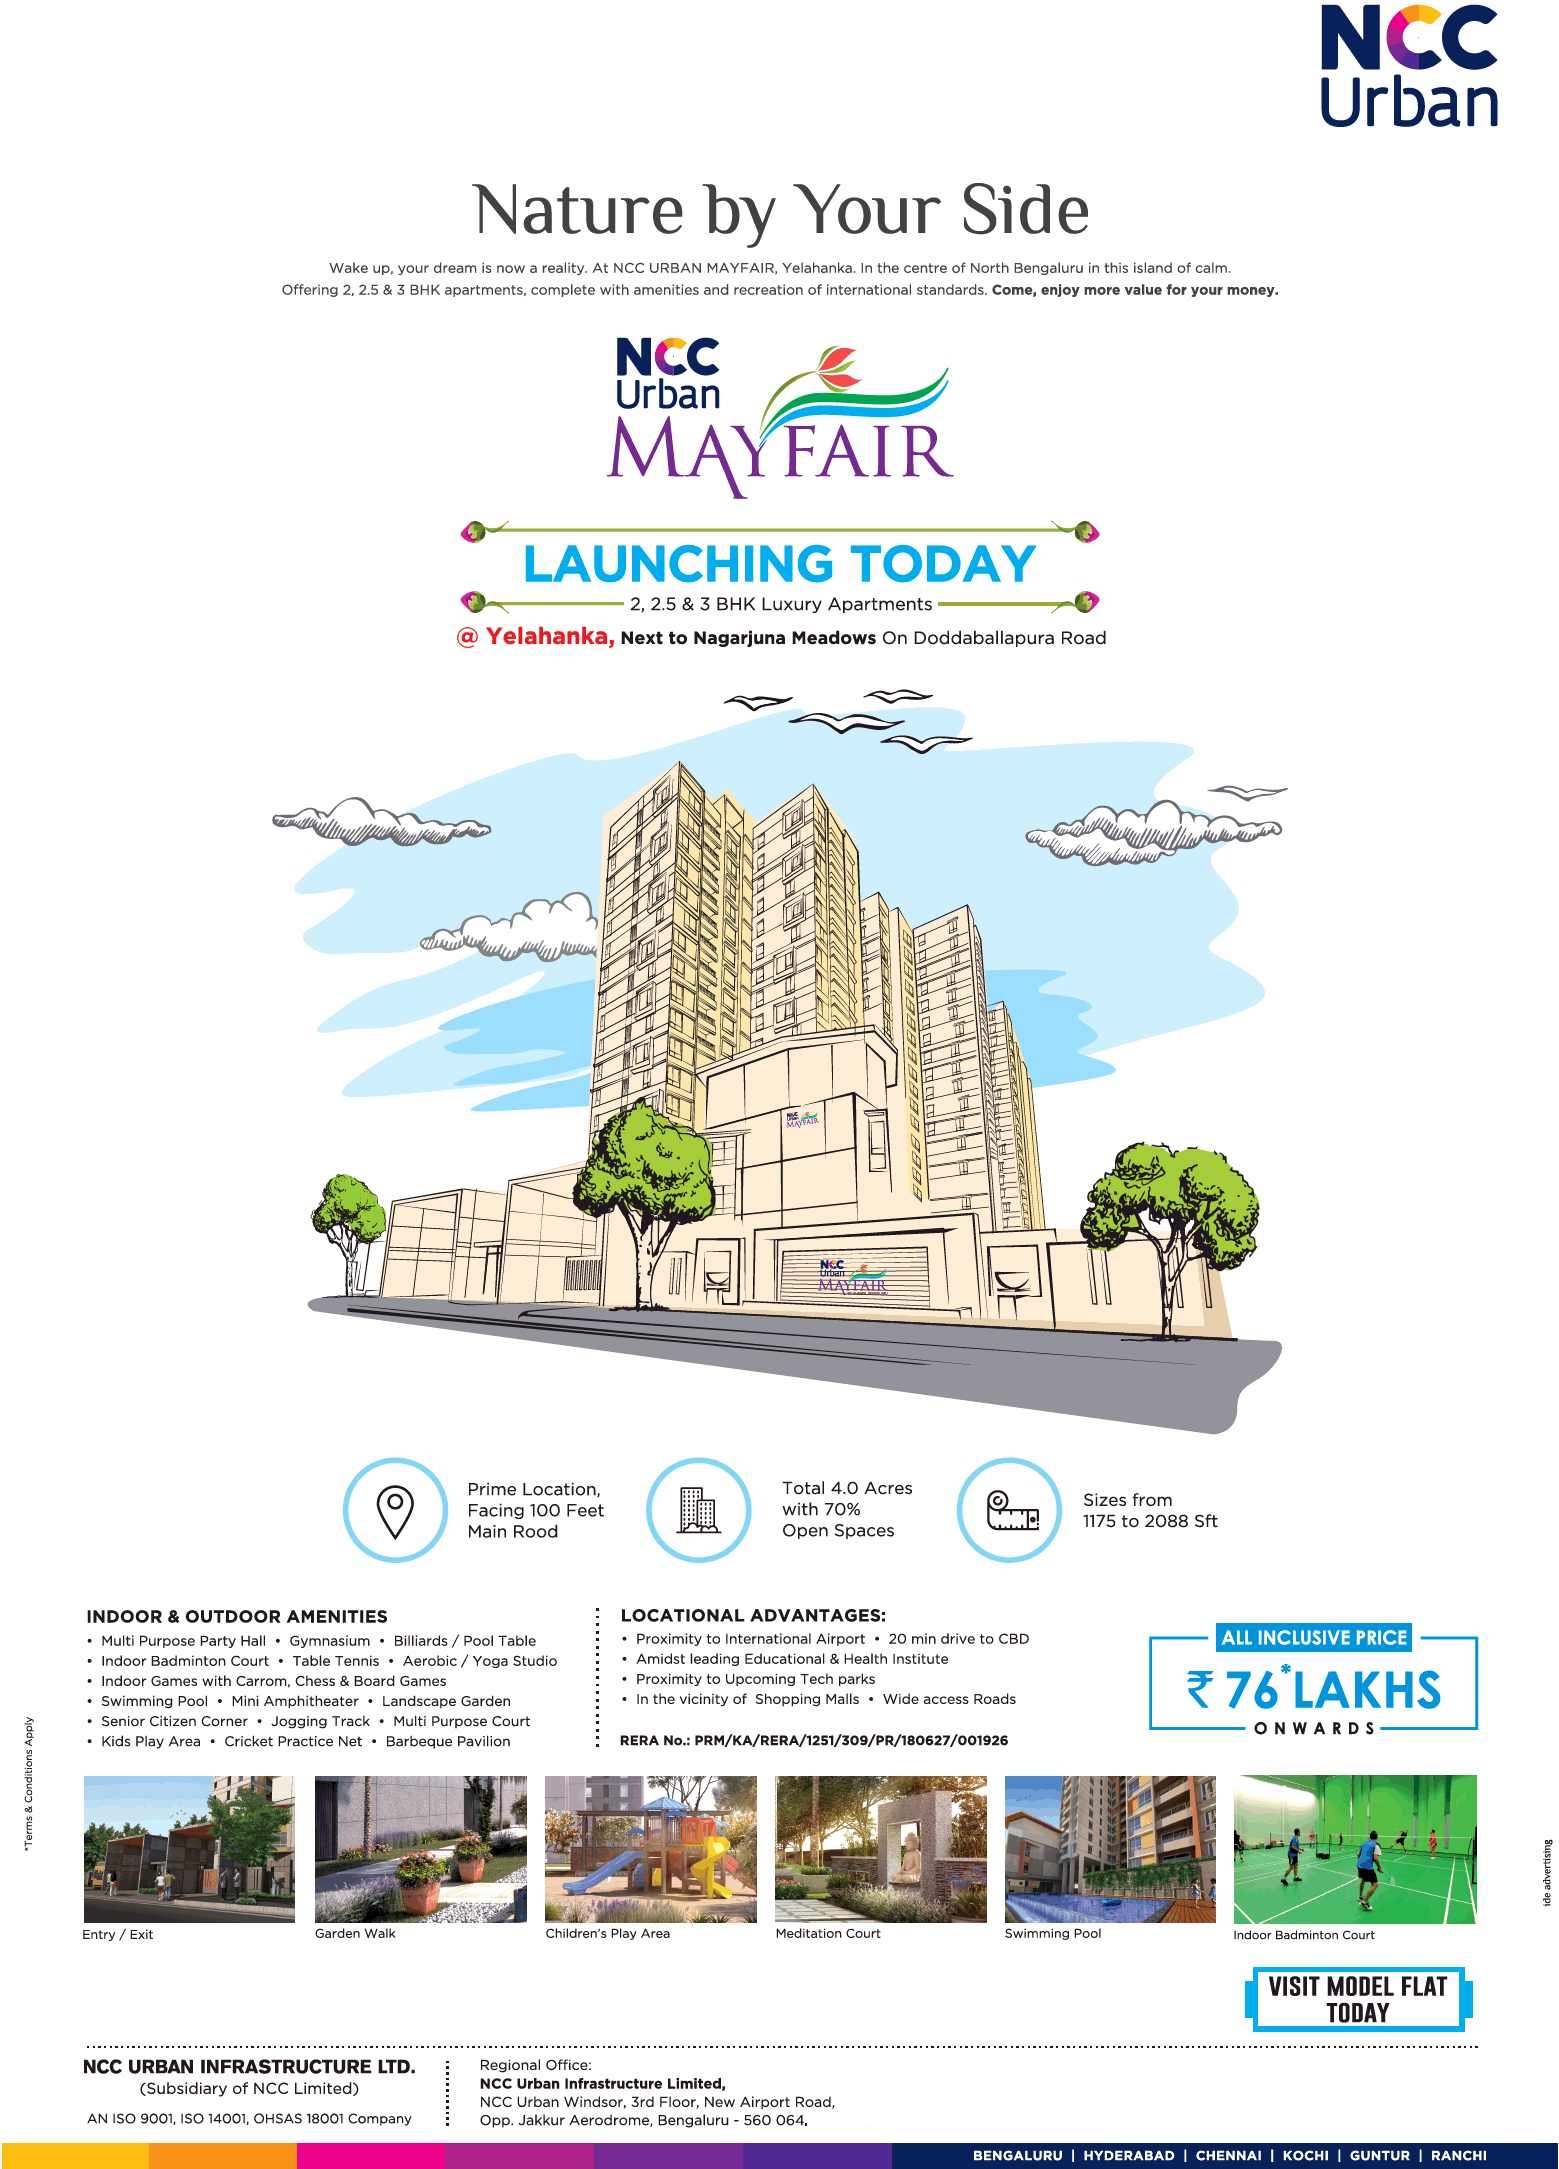 NCC Urban Mayfair launching 2, 2.5 & 3 BHK luxury apartments in Bangalore Update